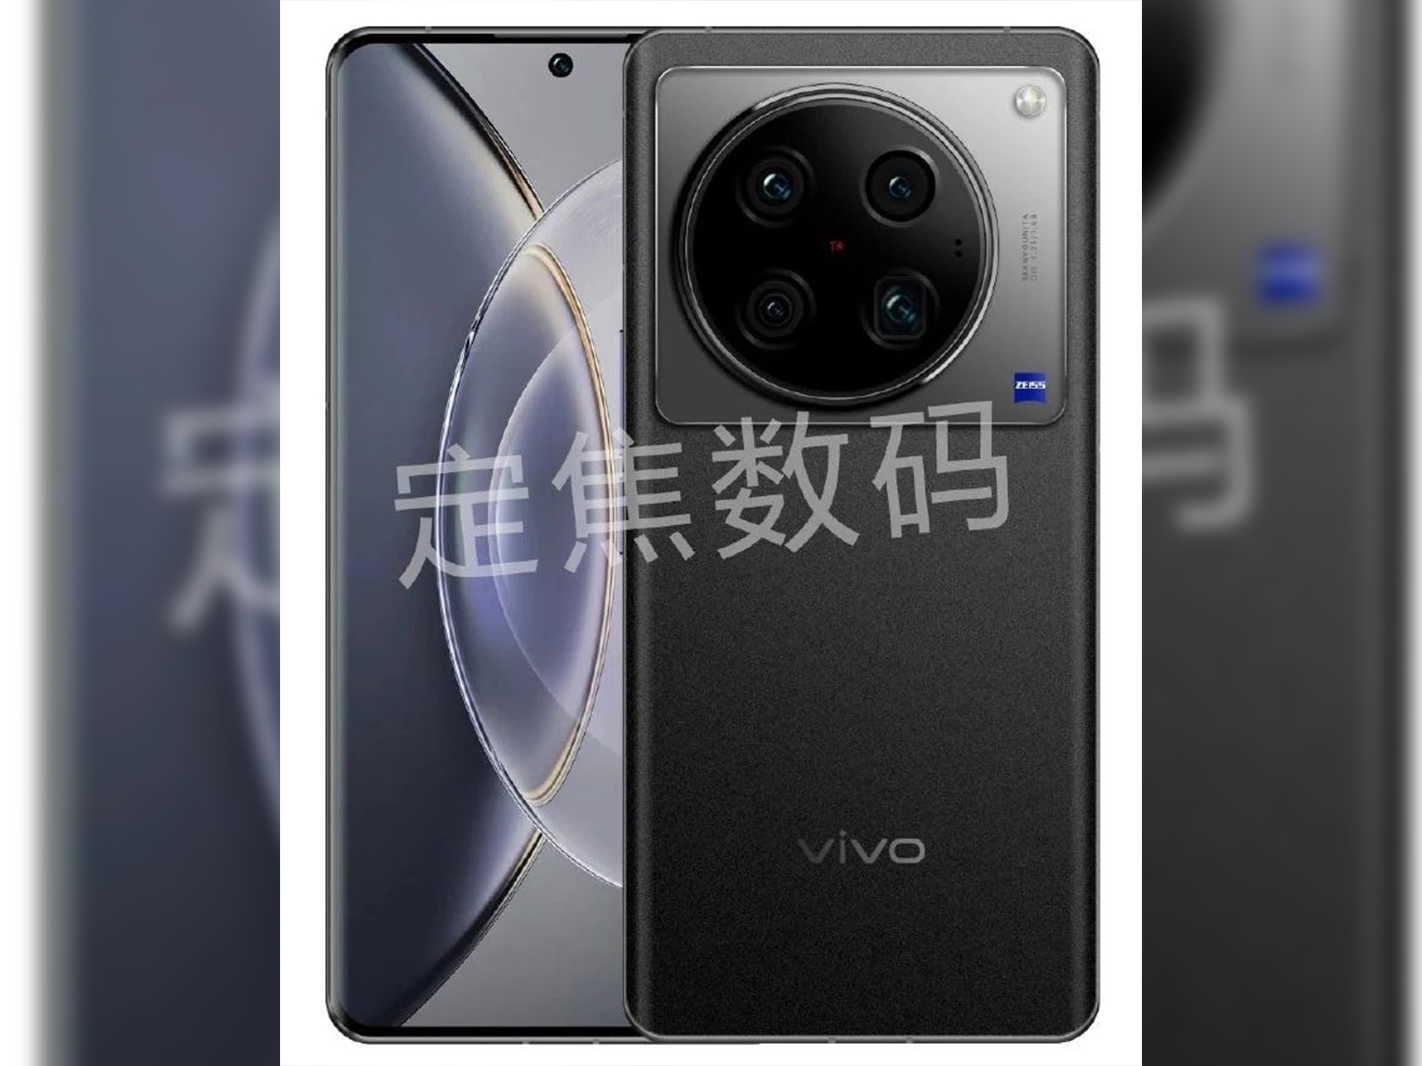 Vivo X100 and Vivo X100 Pro are finally official